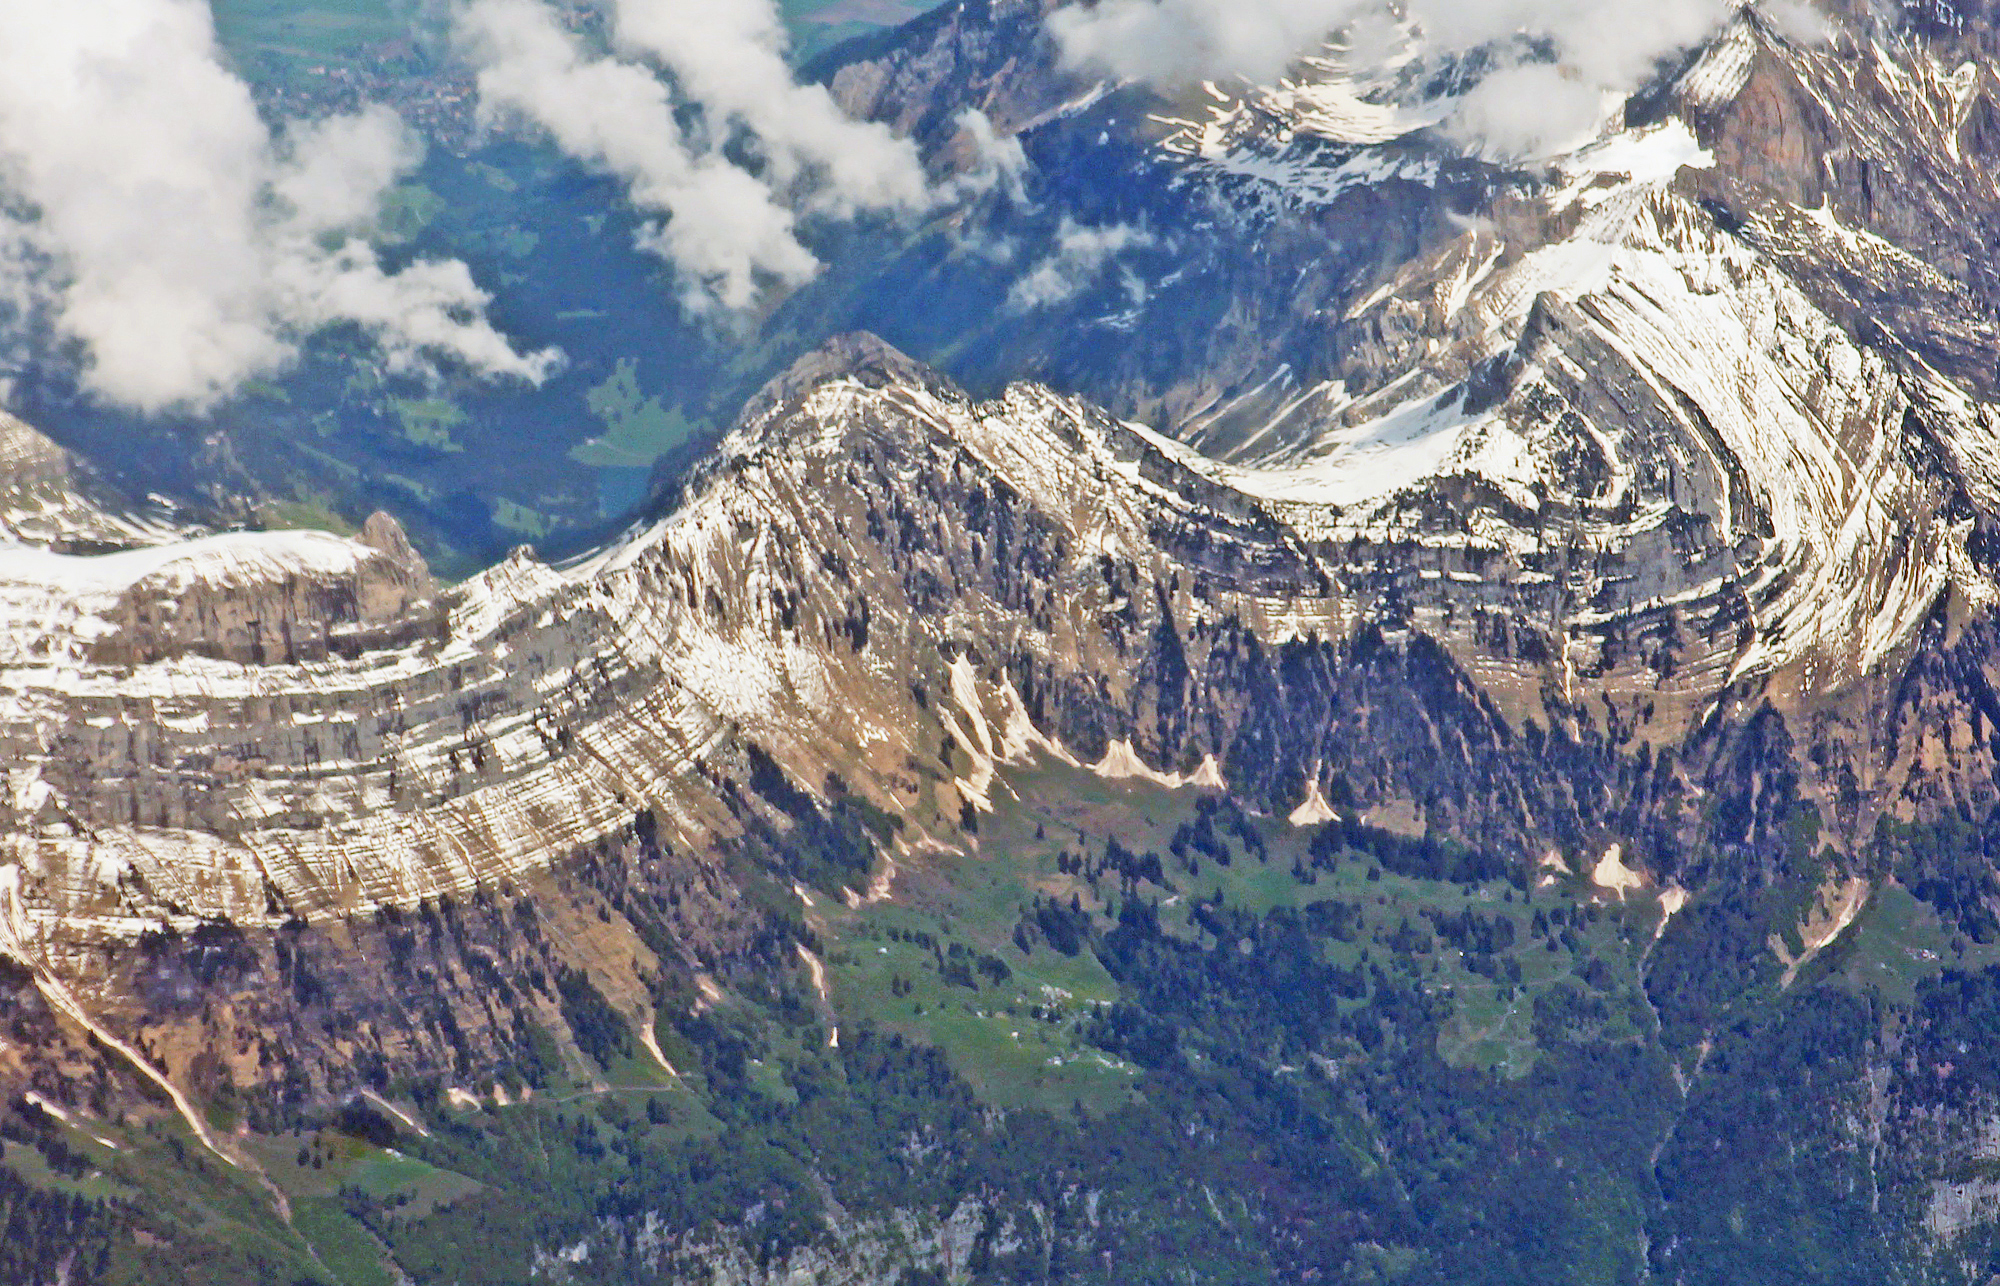  The Alps, Italy 